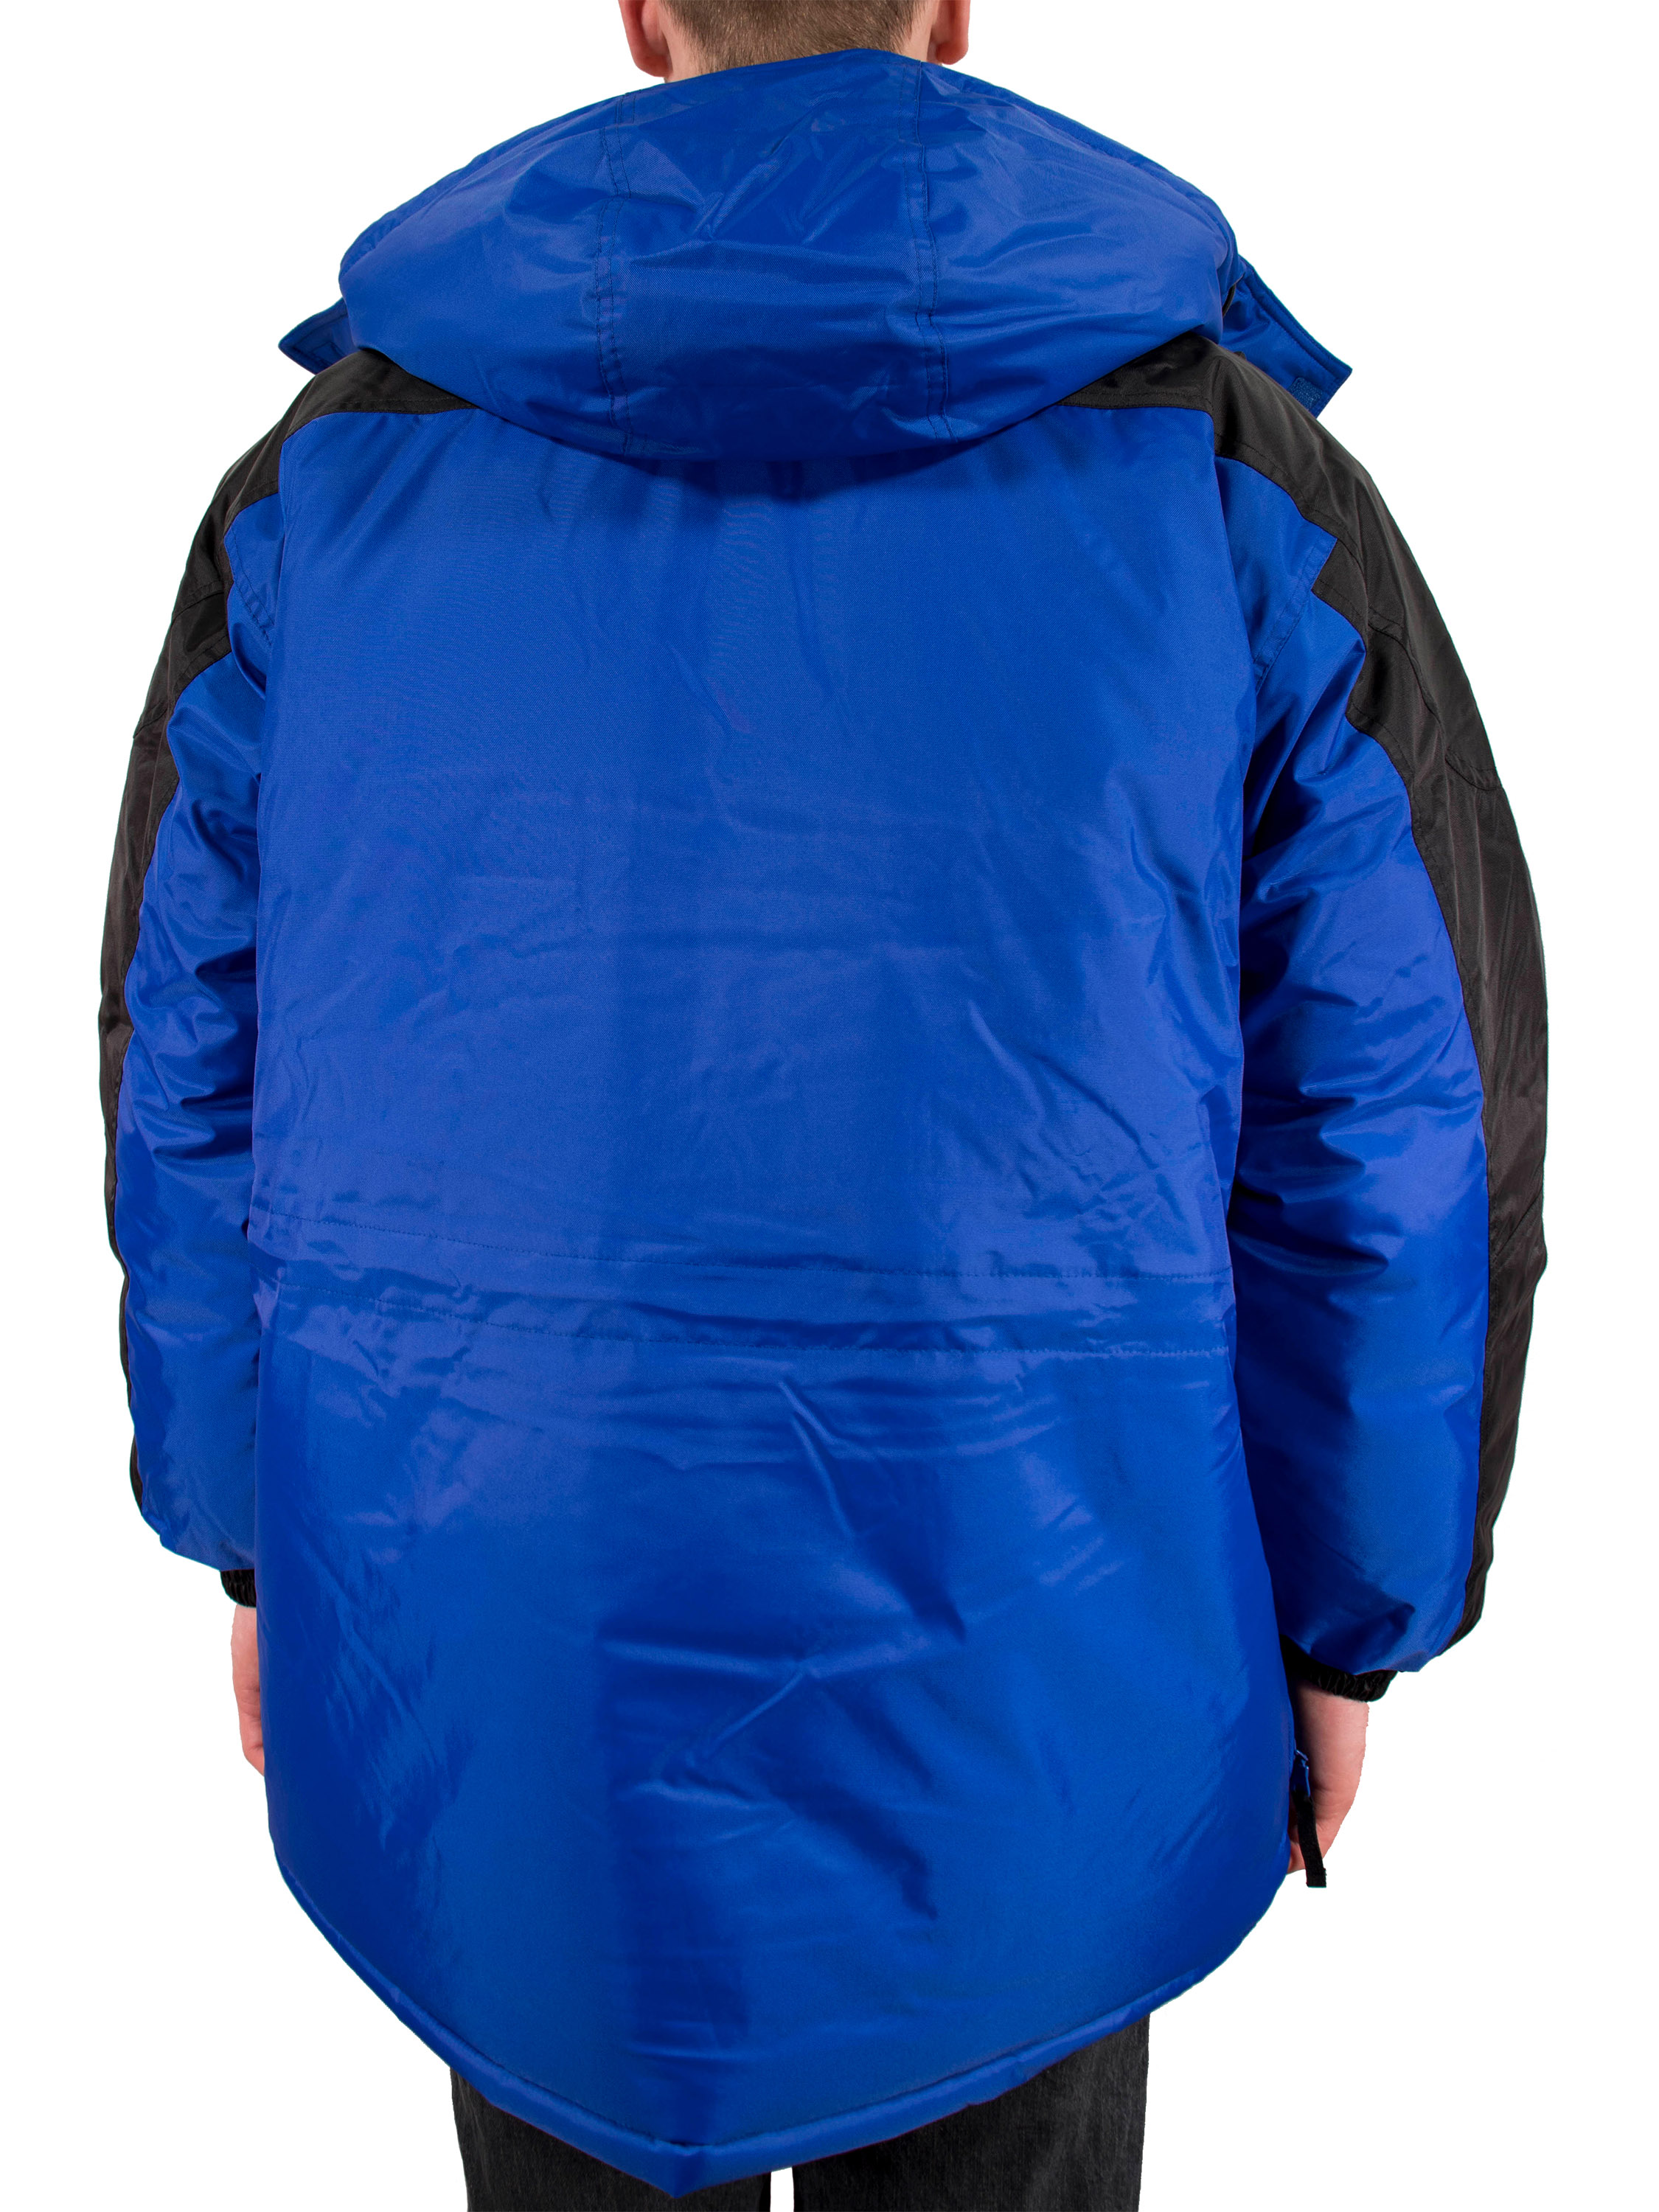 Freeze Defense Warm Men's 3in1 Winter Jacket Coat Parka & Vest (Small, Blue) - image 8 of 10